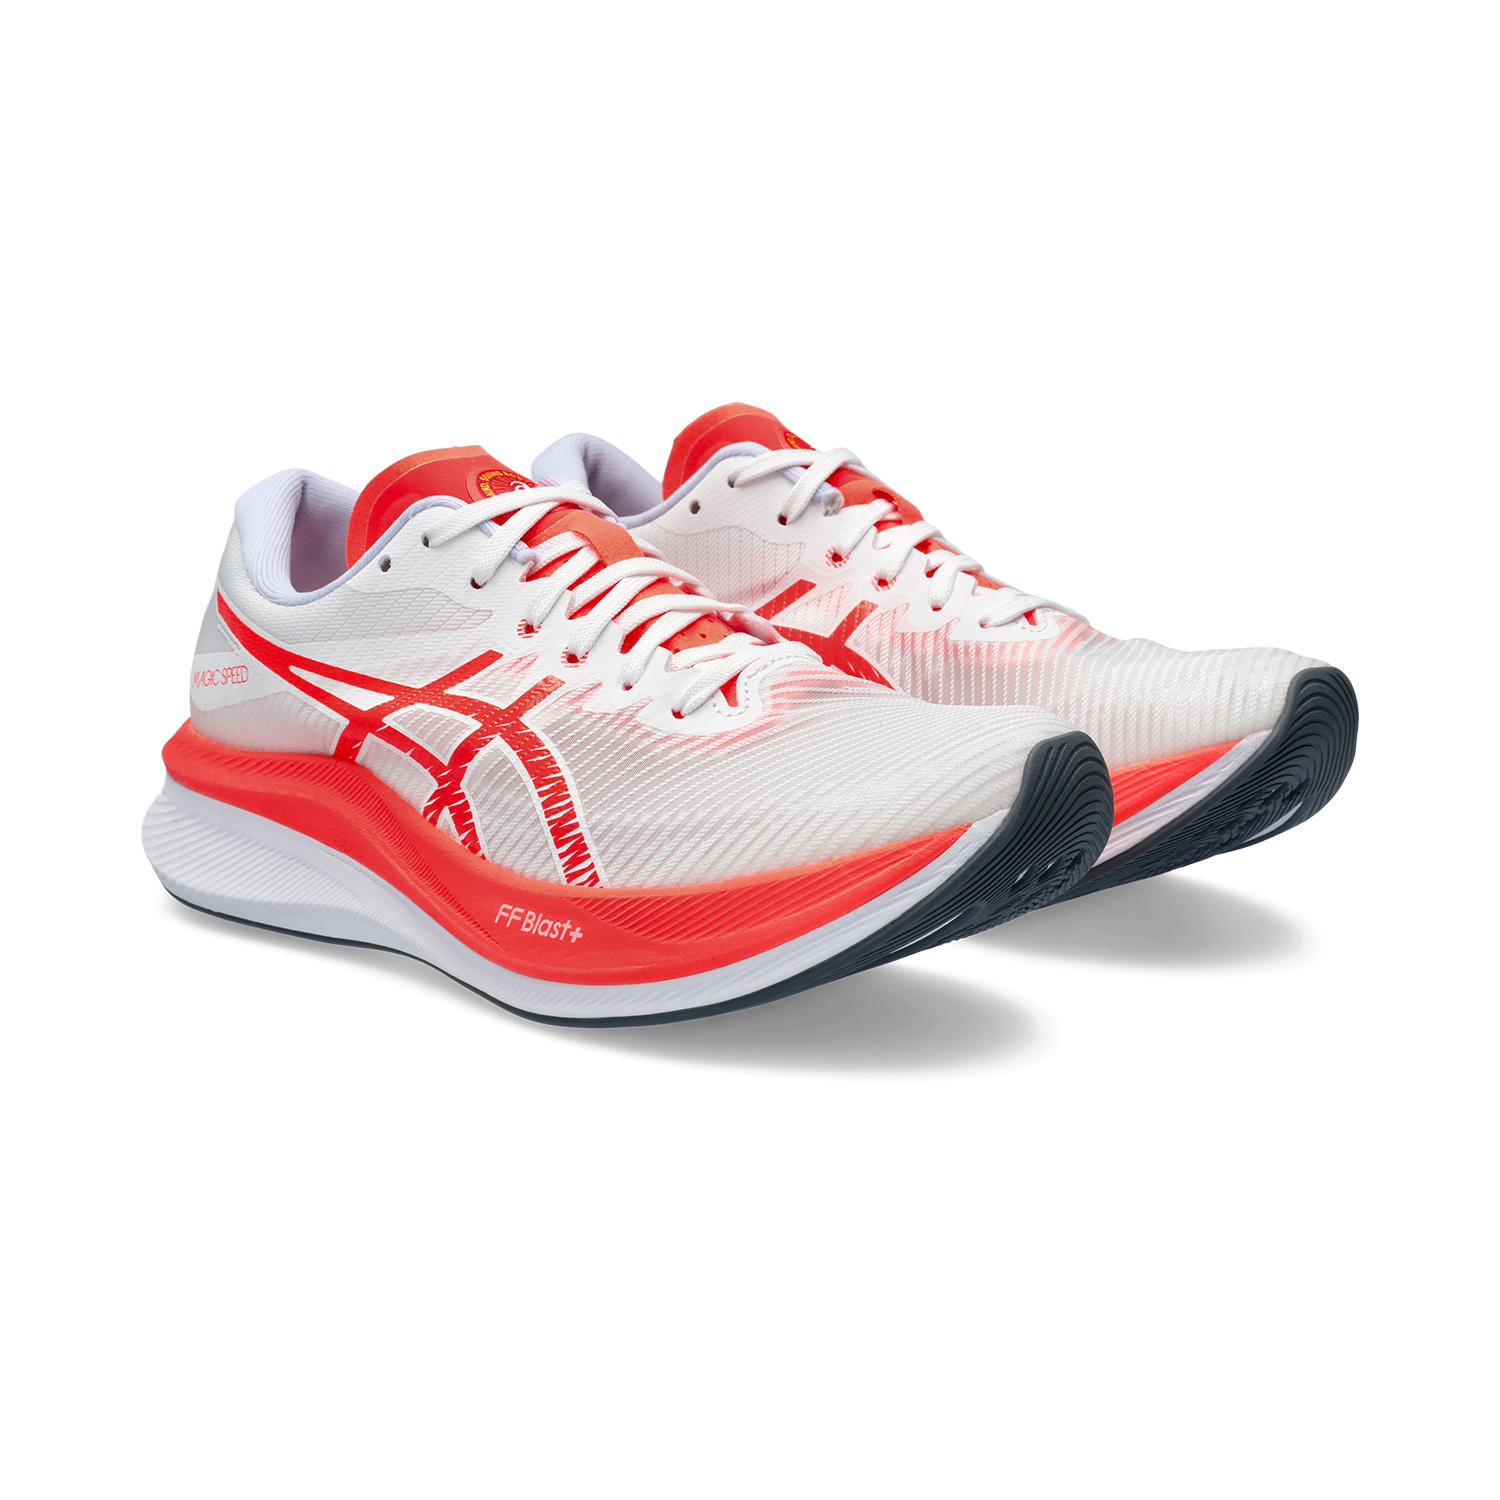 Asics Magic Speed 3 Women's Running Shoes - White/Sunrise Red